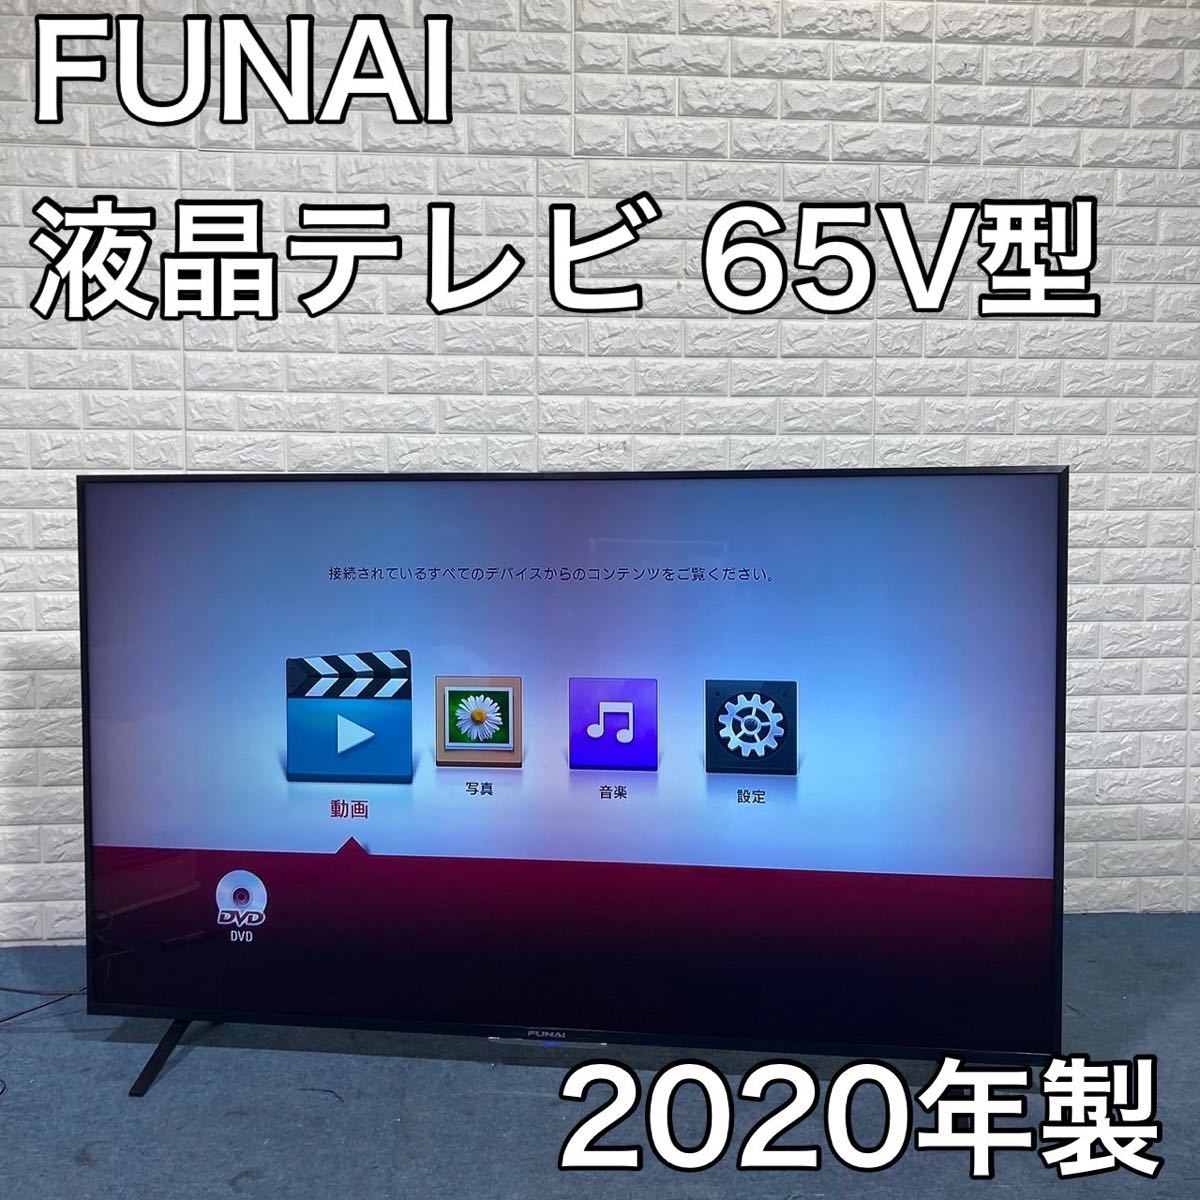 FUNAI 液晶テレビ FL-65UP520 65V型 2020年製 BB290